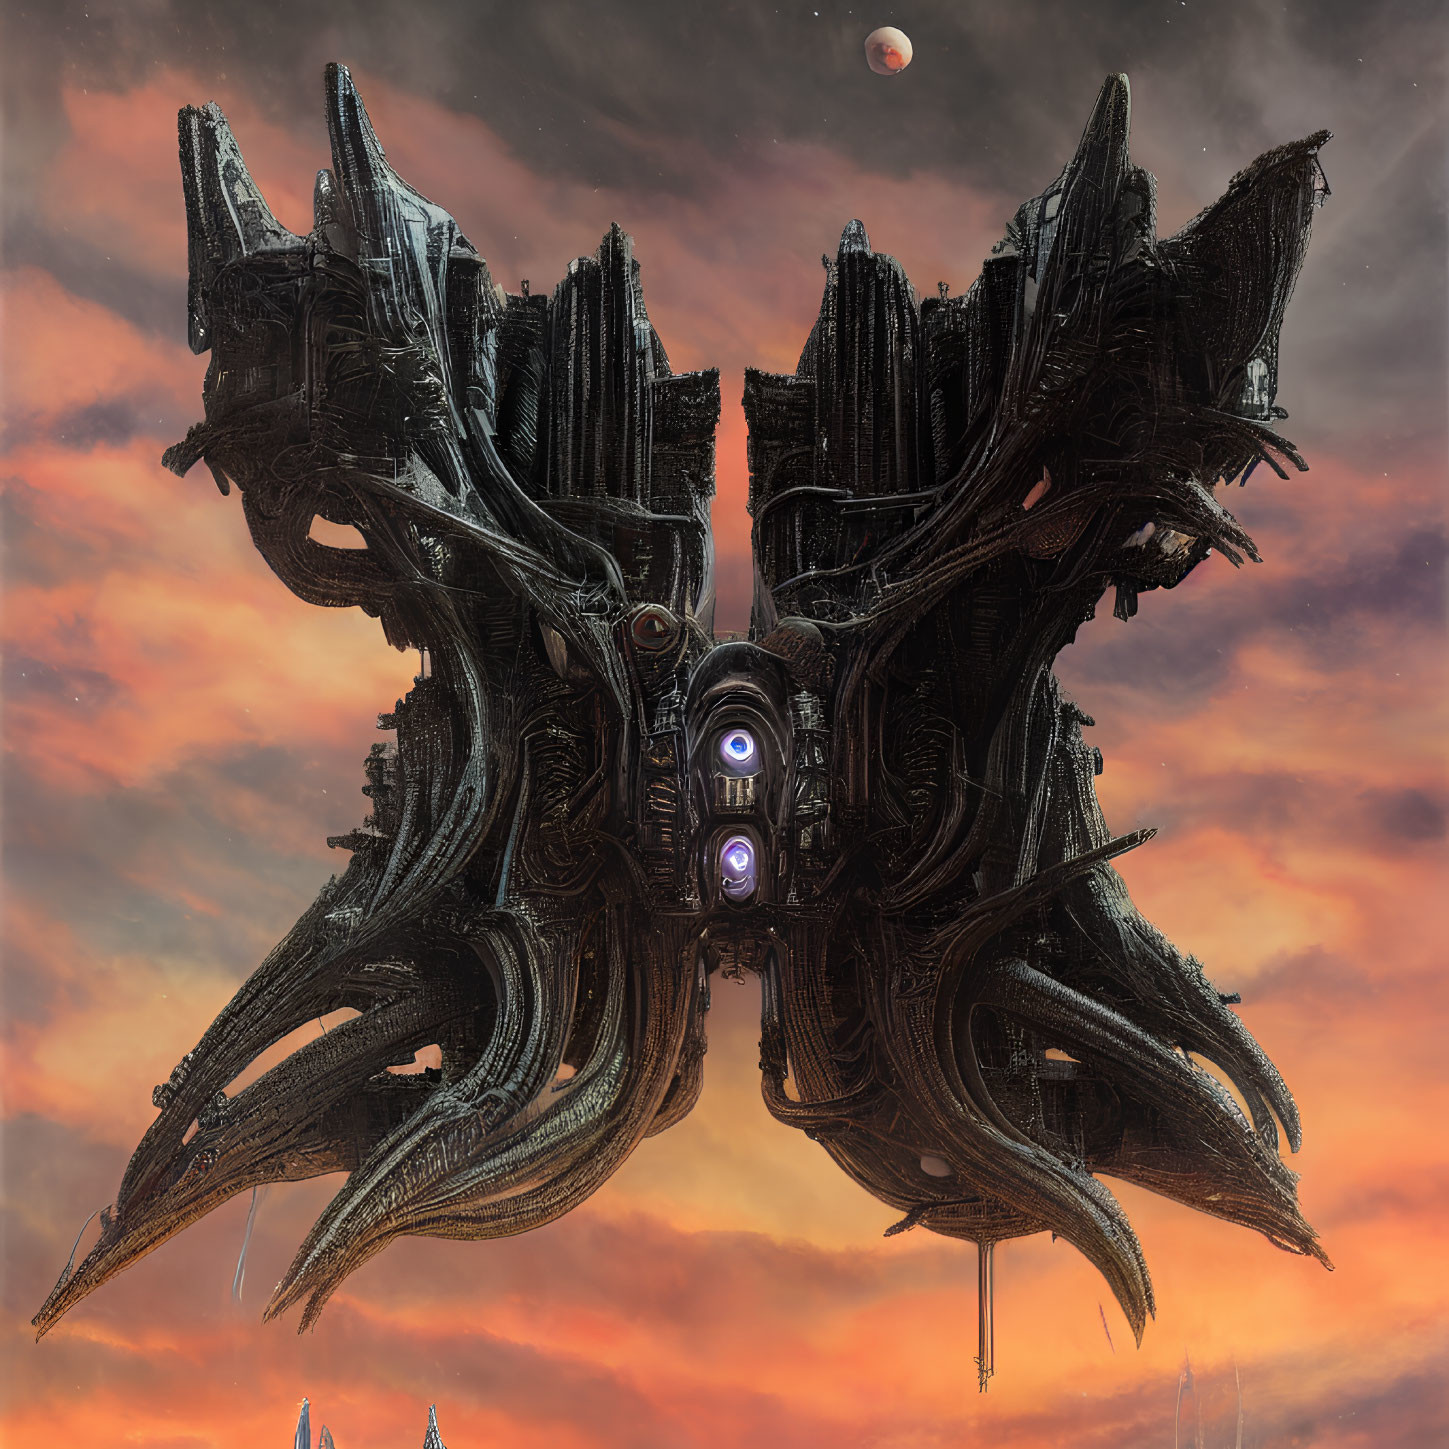 Gigantic biomechanical alien spaceship under dusky sky with intricate designs